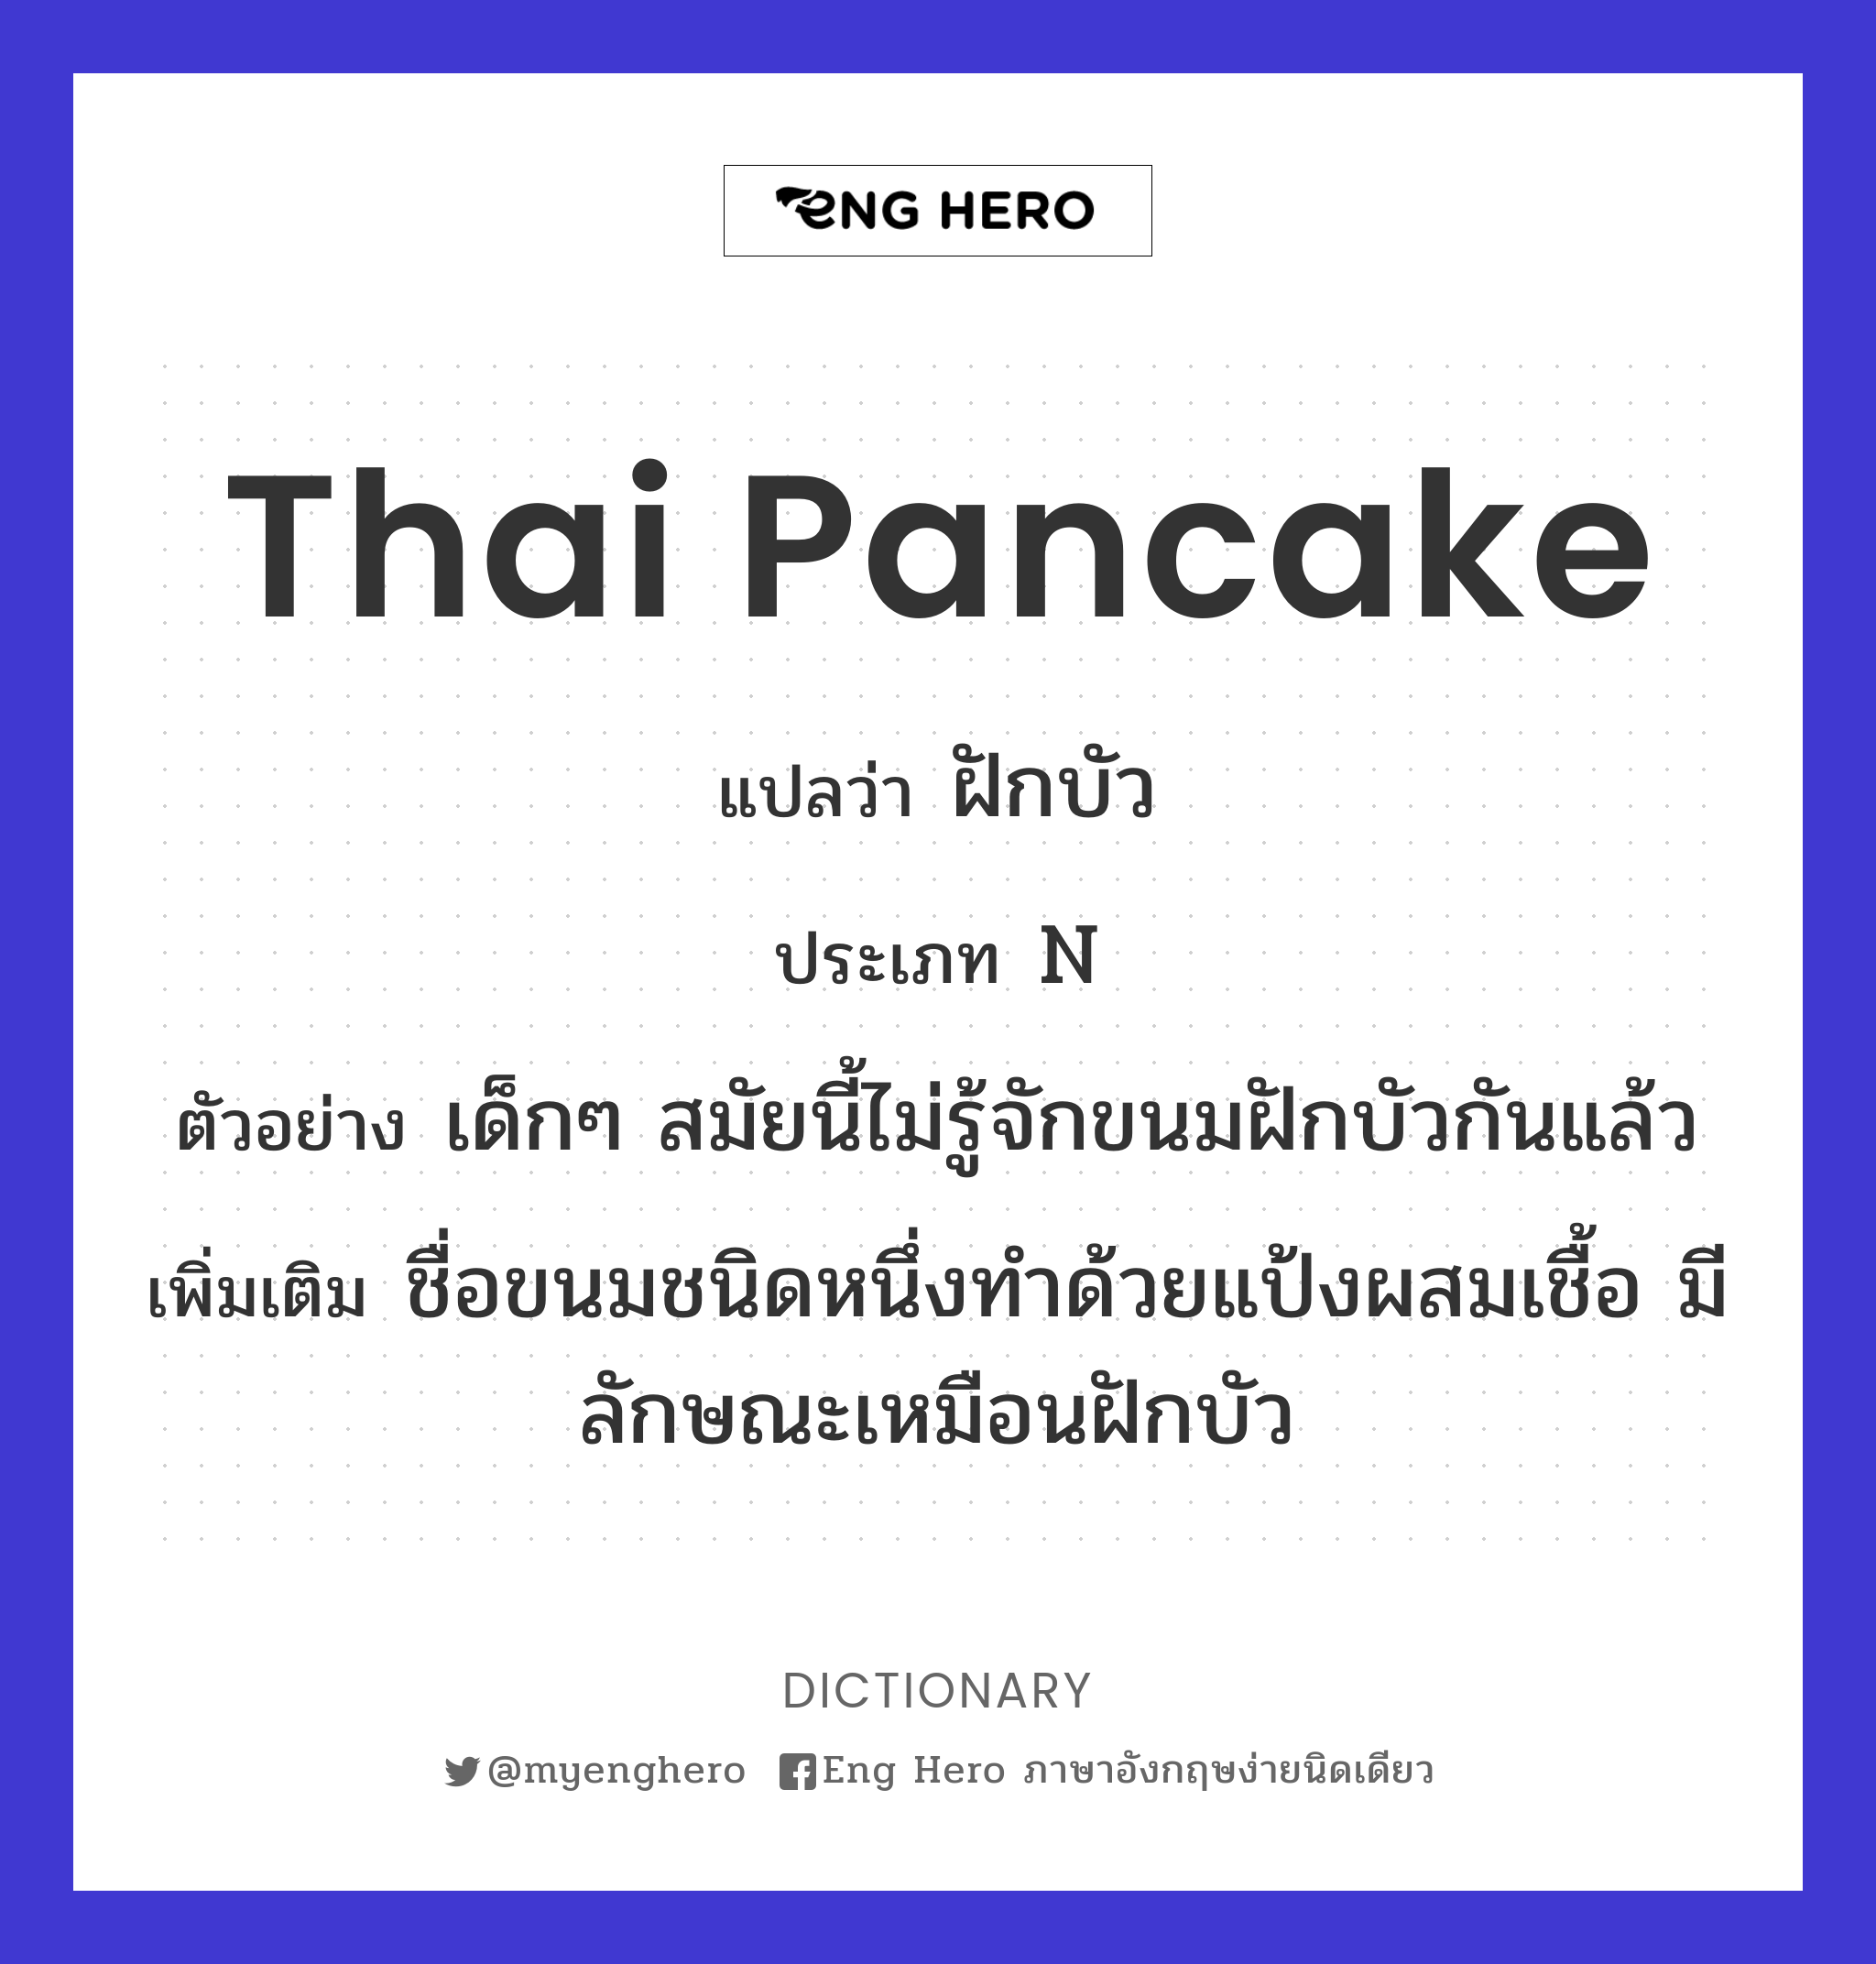 Thai pancake